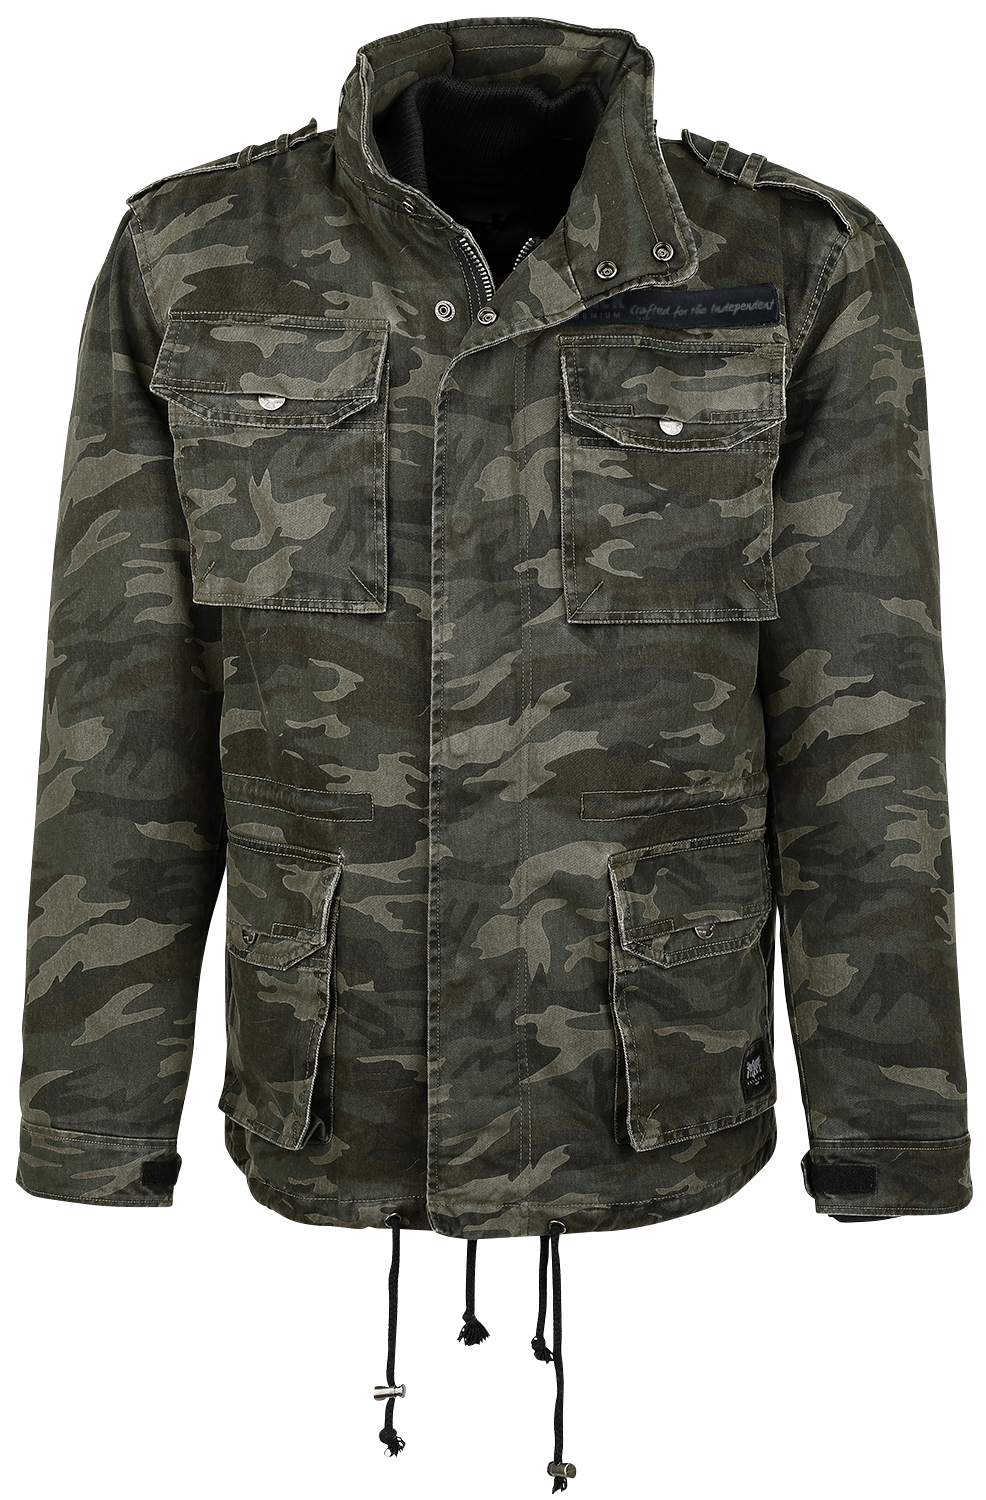 Black Premium by EMP - Army Field Jacket - Winterjacke - camouflage - EMP Exklusiv!